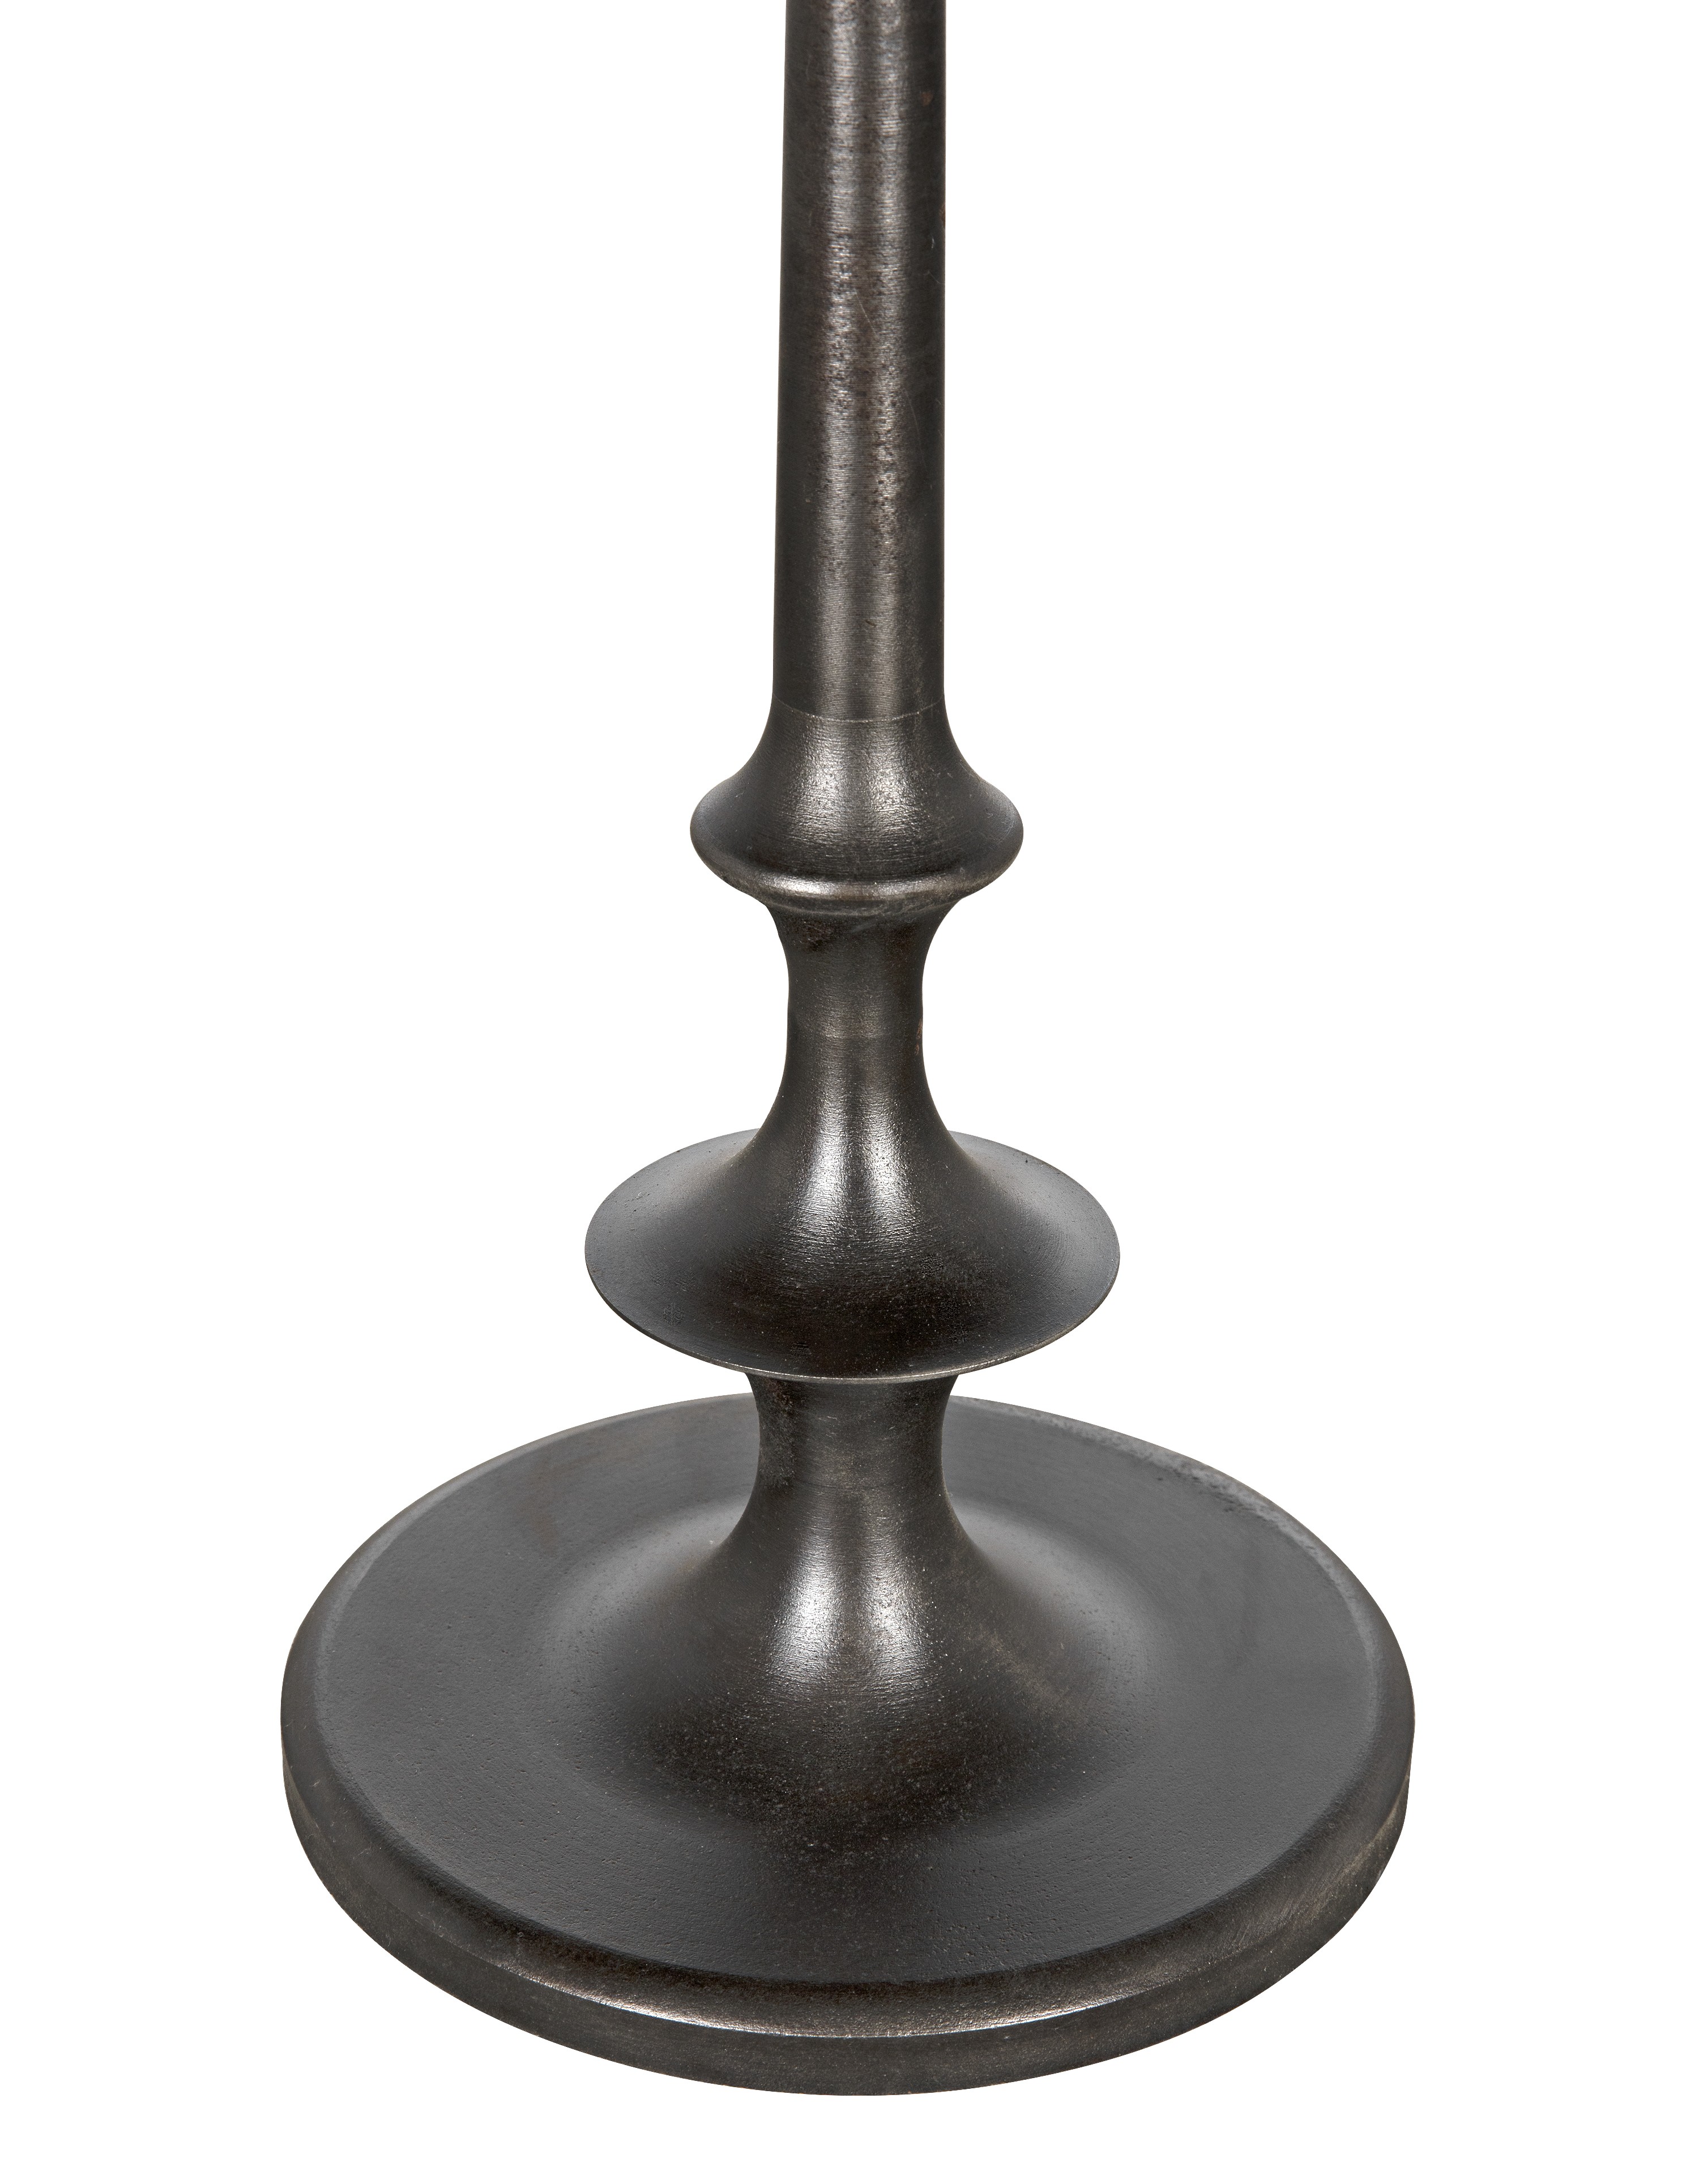 a tall metal pole with a black base